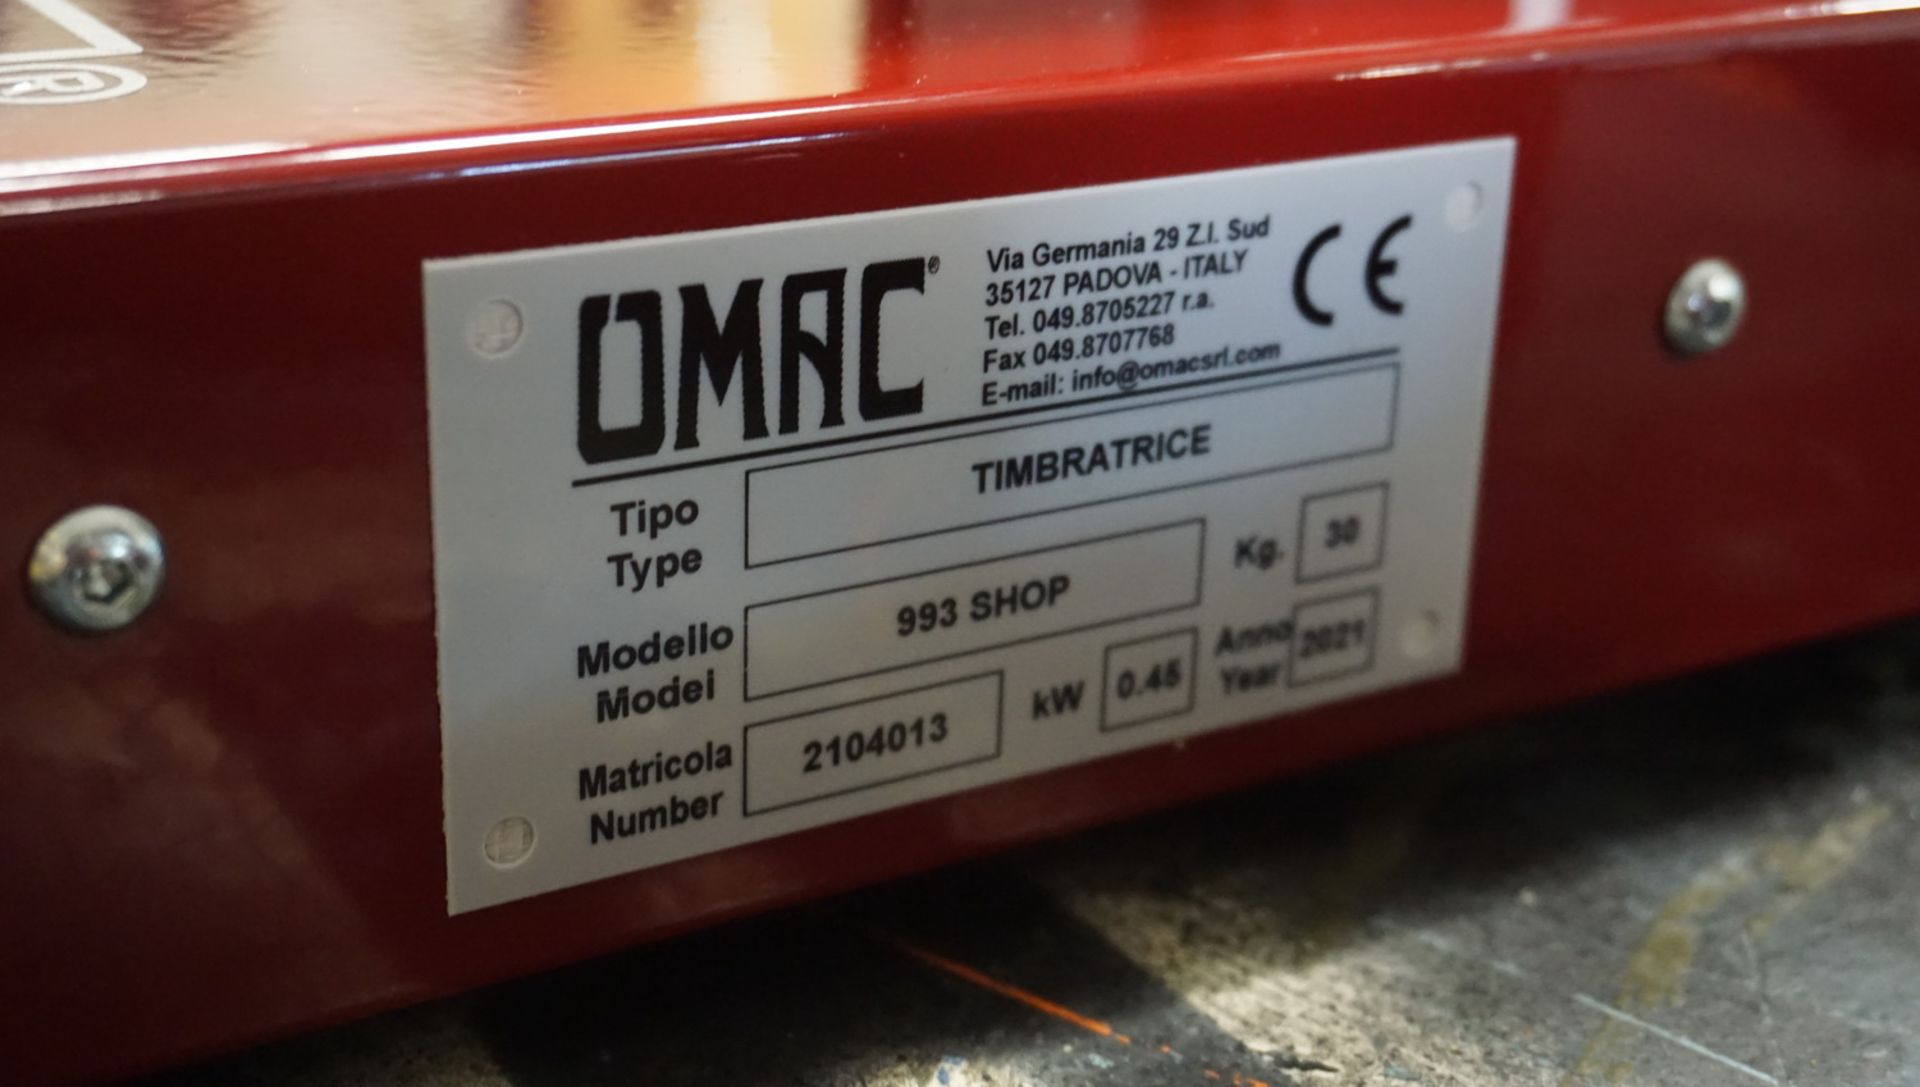 (NEW) OMAC TYPE TIMBATRICE 993 SHOP MANUAL STAMPING MACHINE, S/N 2104013 - Image 4 of 4